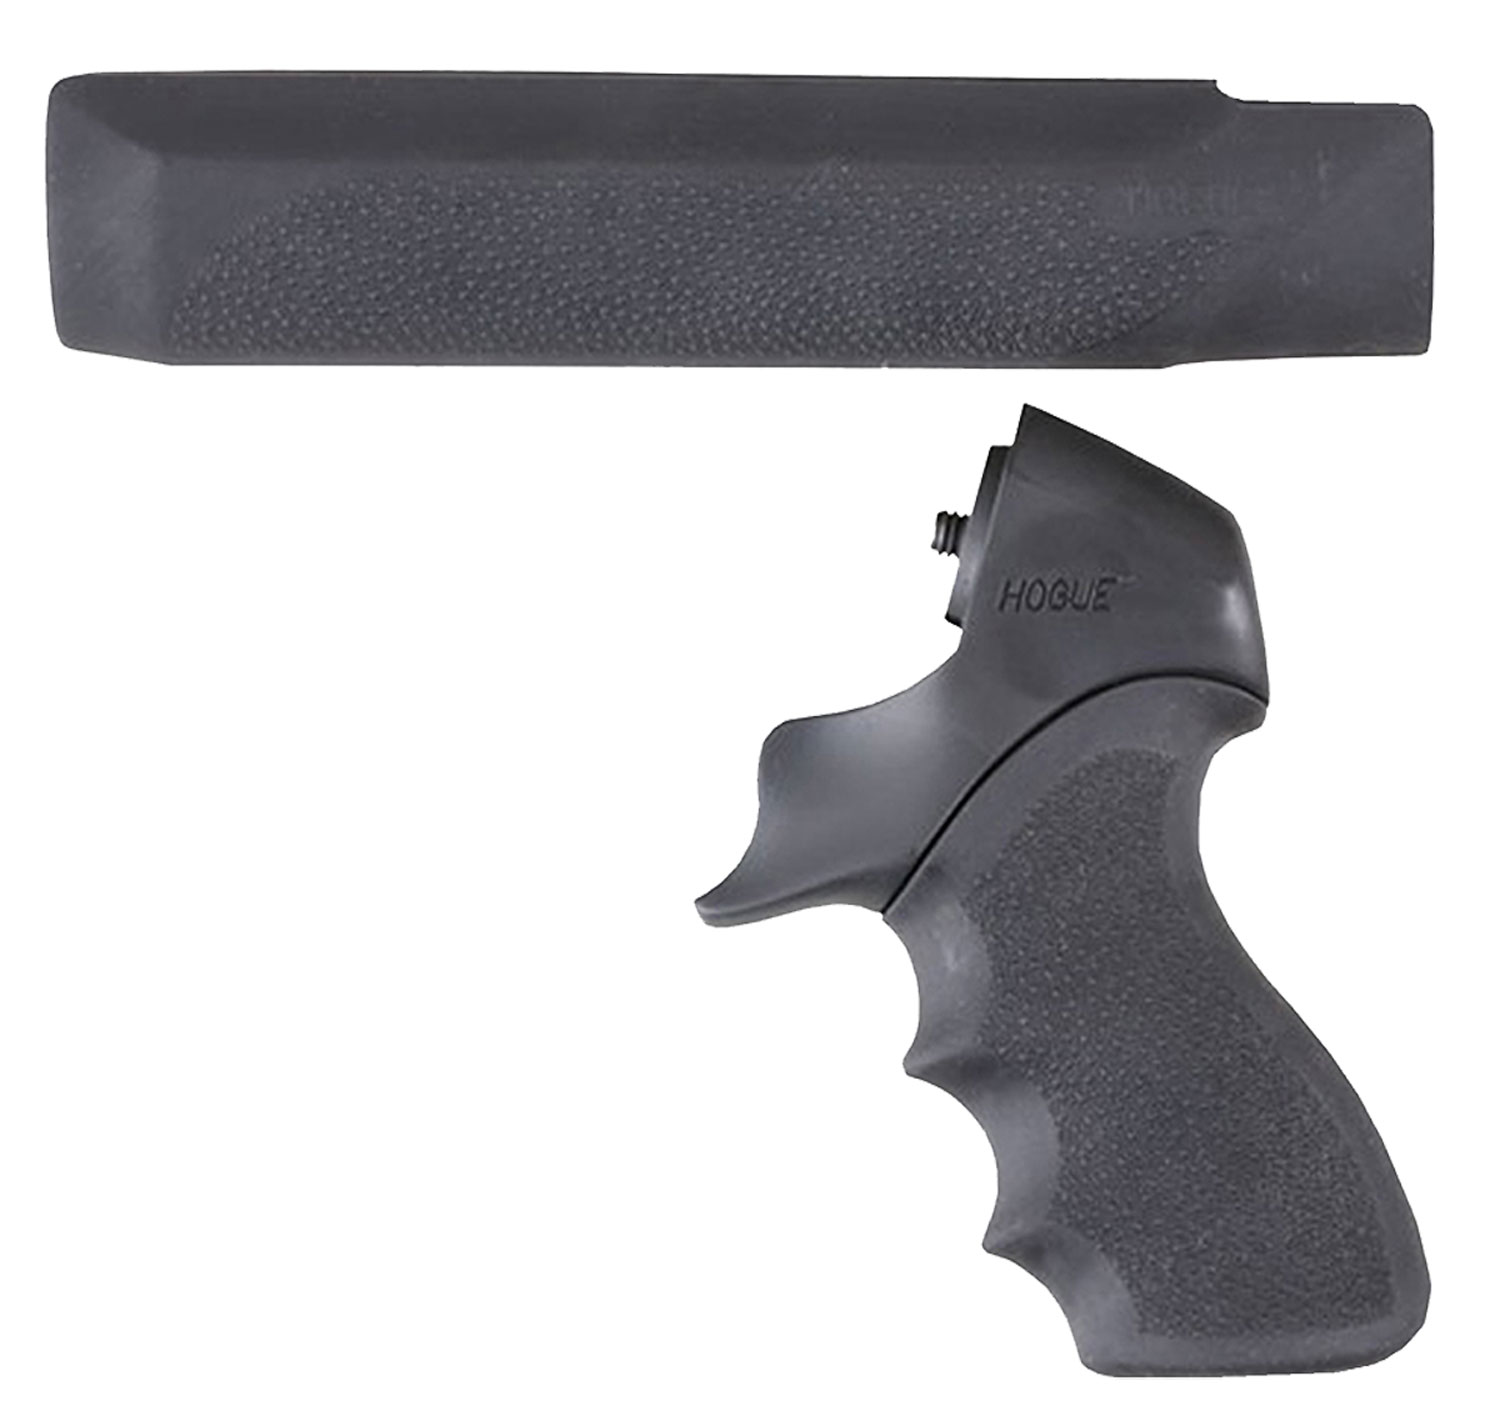 Hogue 05015 OverMolded Tamer Pistol Grip & Forend Black Rubber with Finger Grooves, Polymer Forend for Mossberg 500 12  Gauge